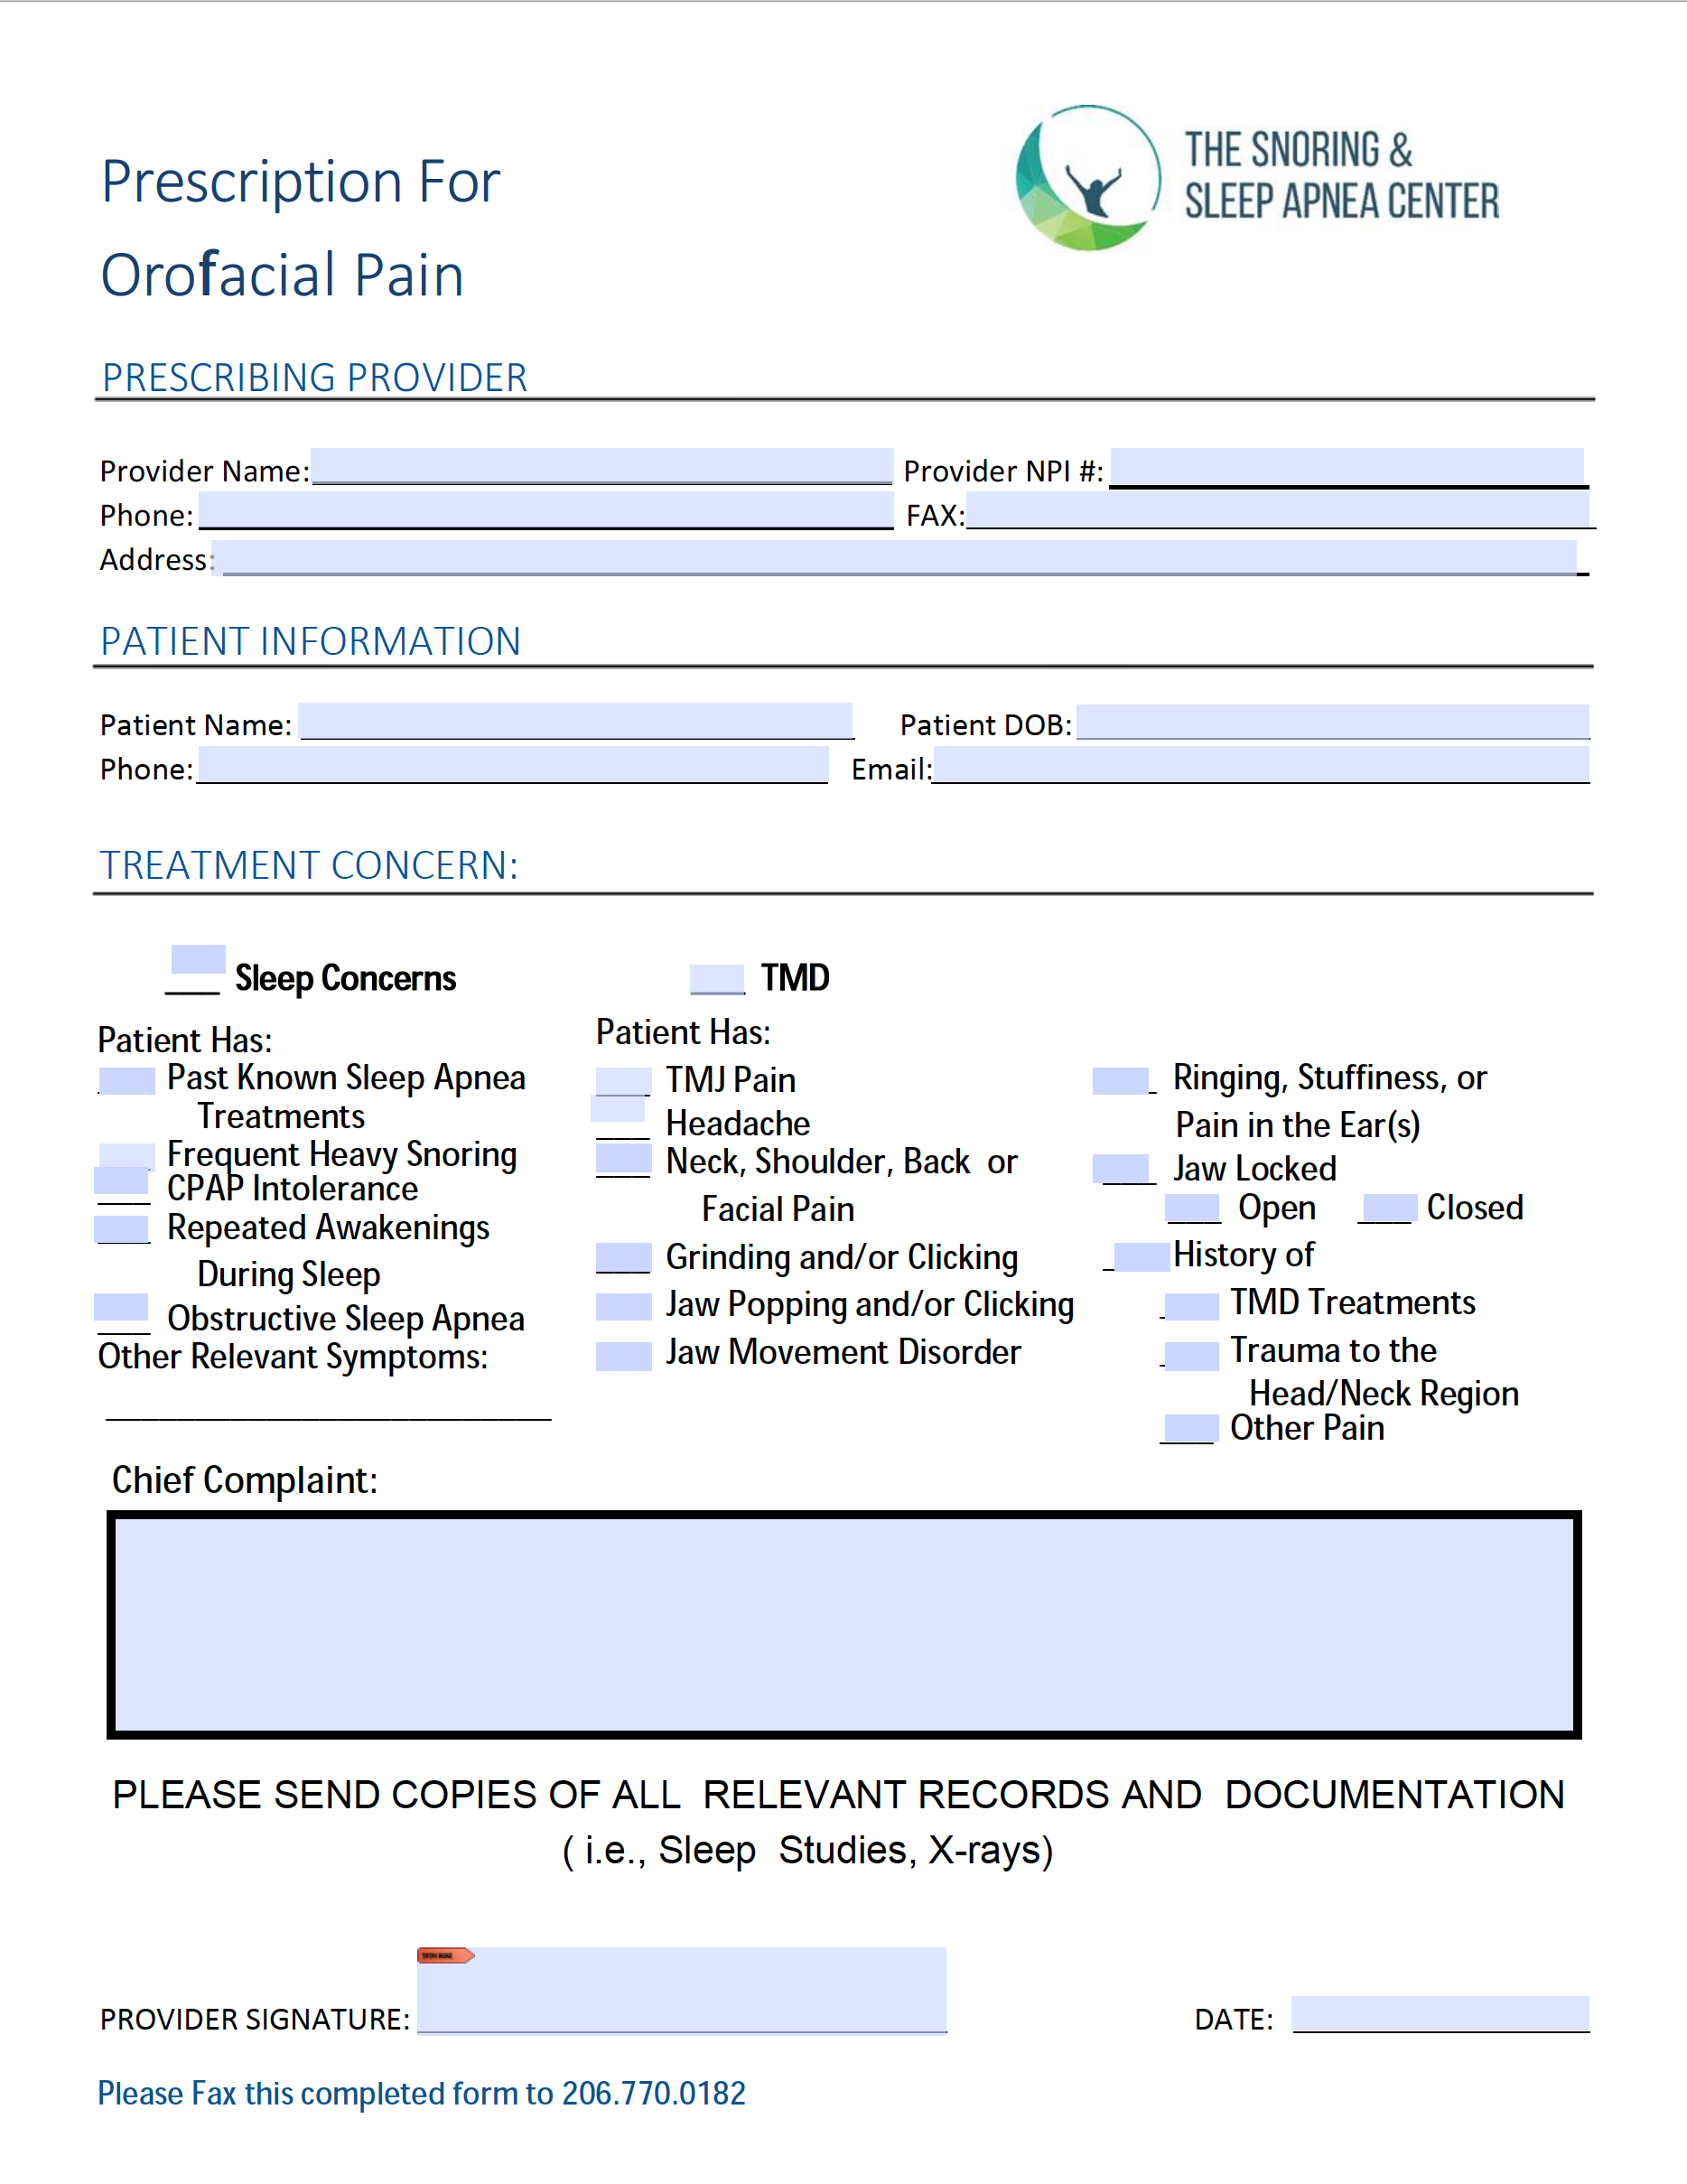 Prescription for orofacial pain